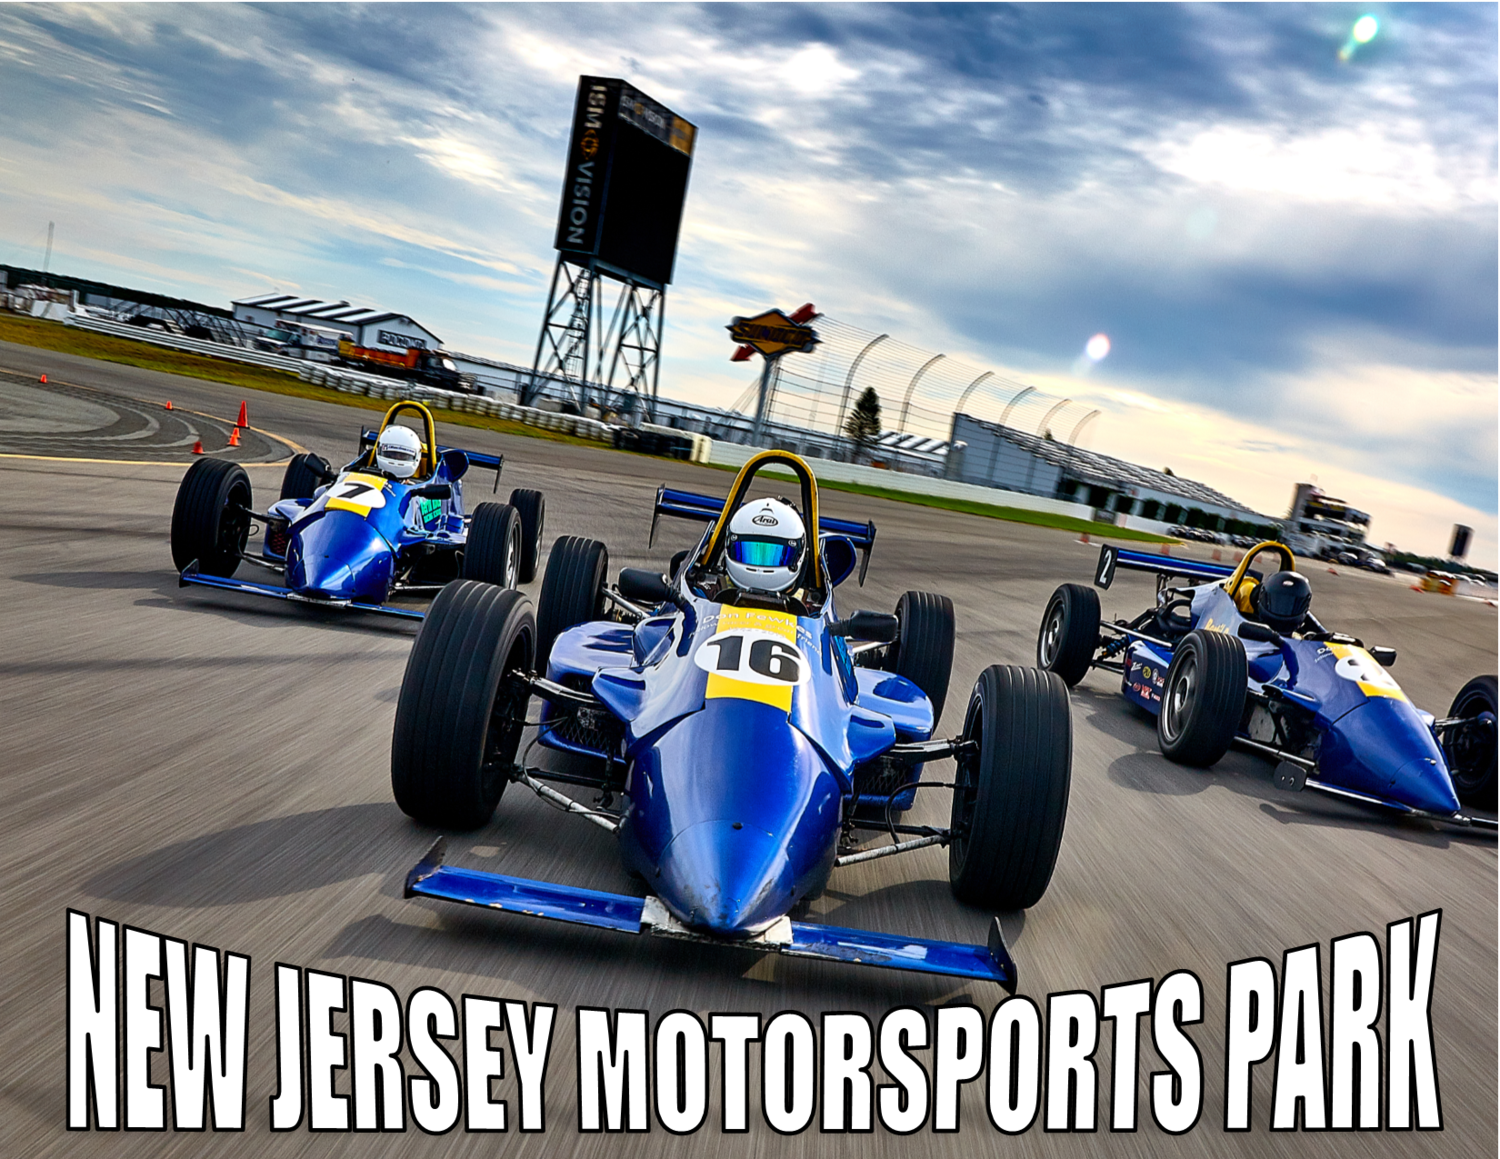 New Jersey Motorsports Park - 3 Day Road Racing School